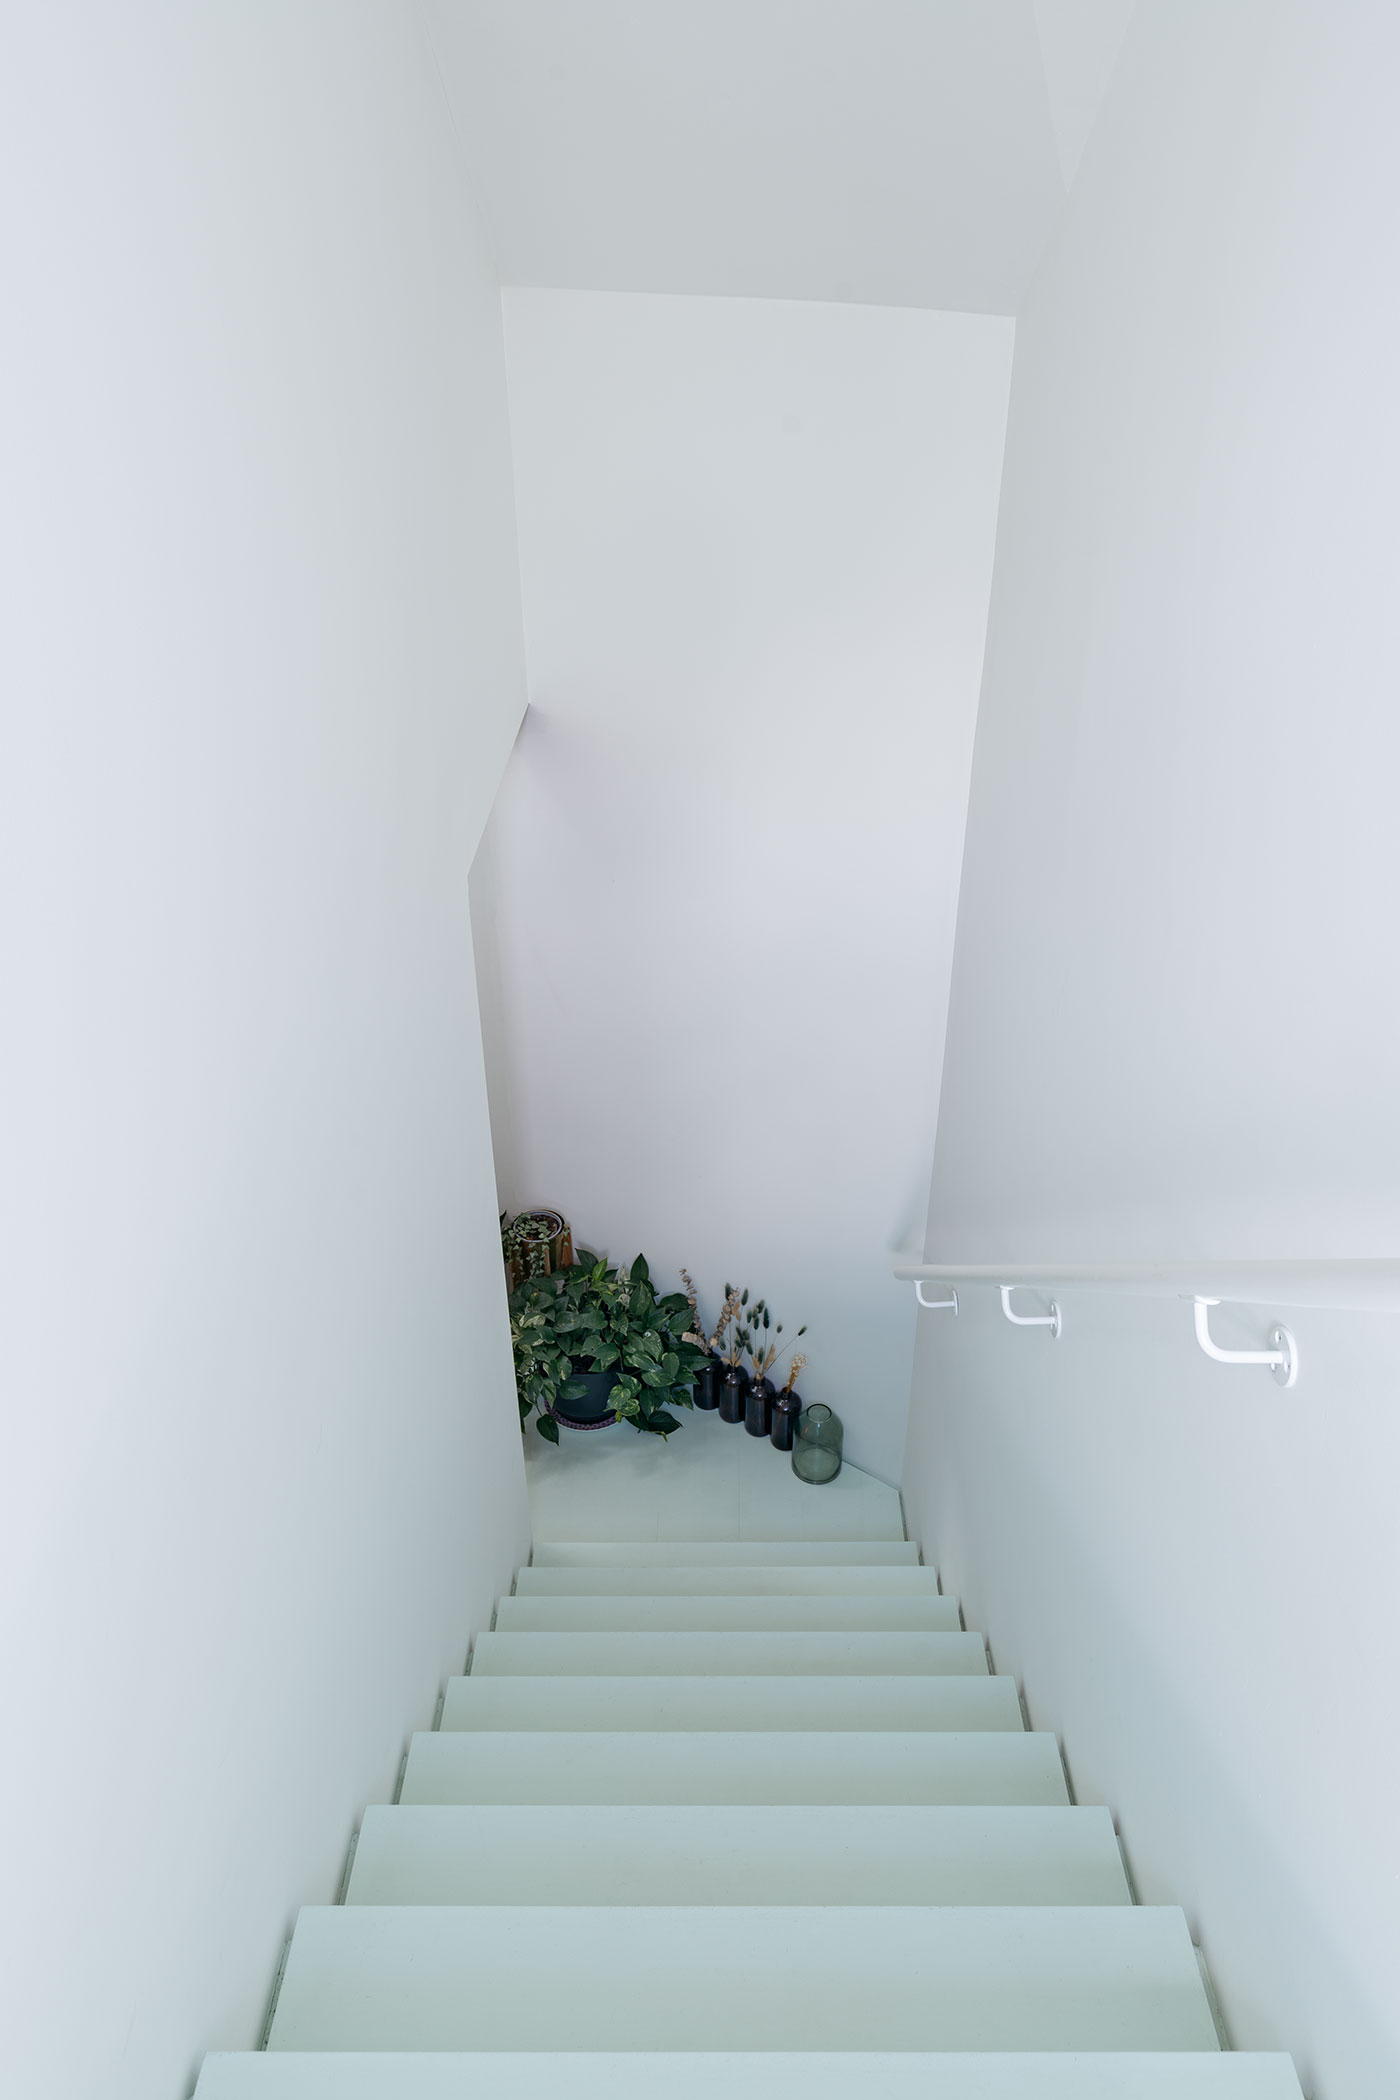 Architect Gabriel Fain's Laneway house stairs